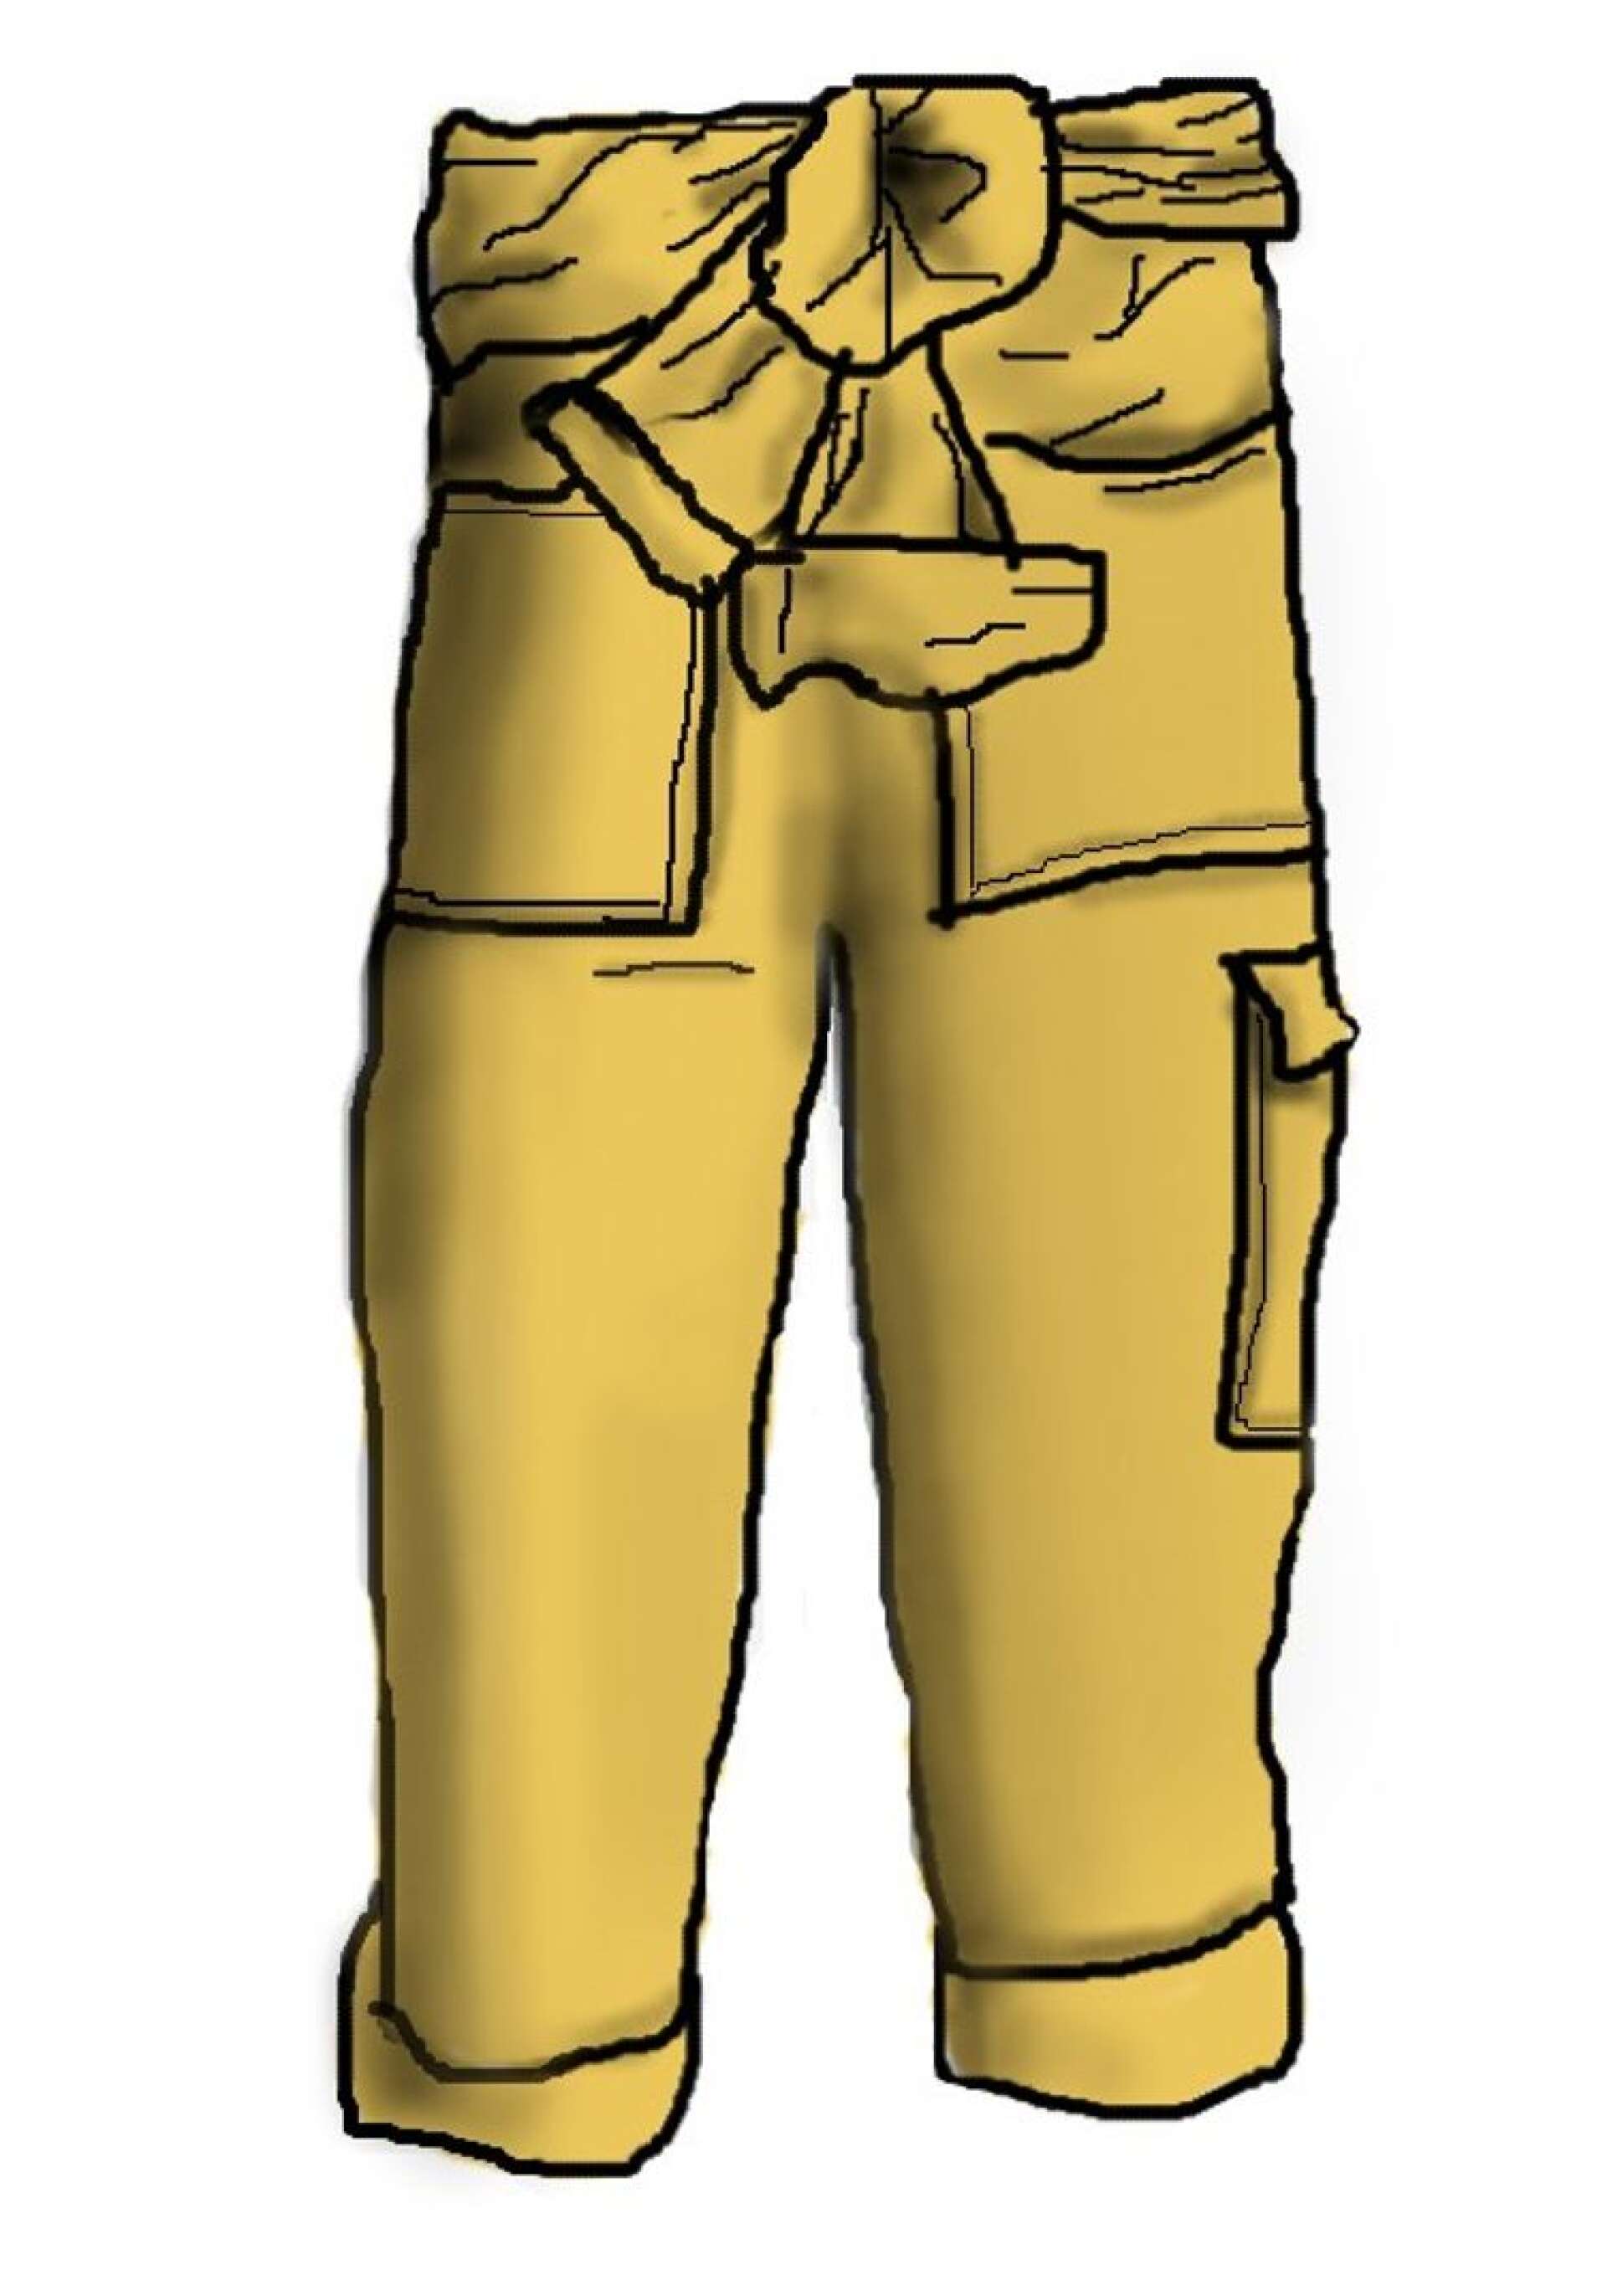 MiNK har på sig sina gula overaller. 